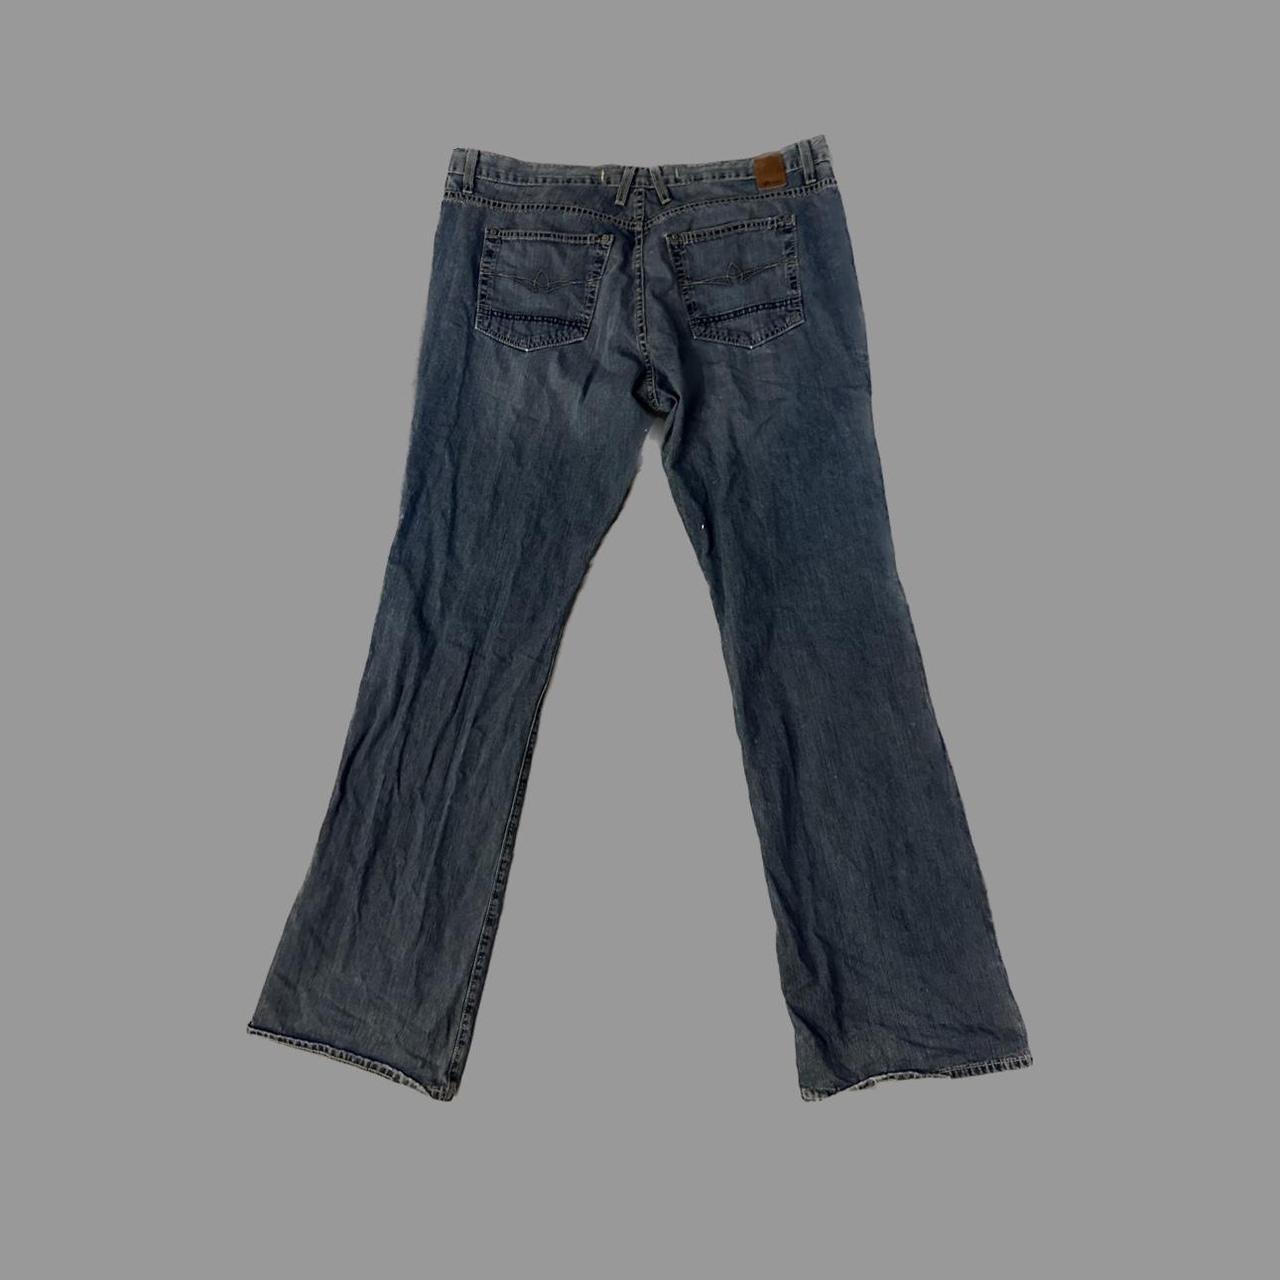 Denimsmith Men's Blue and Navy Jeans (2)